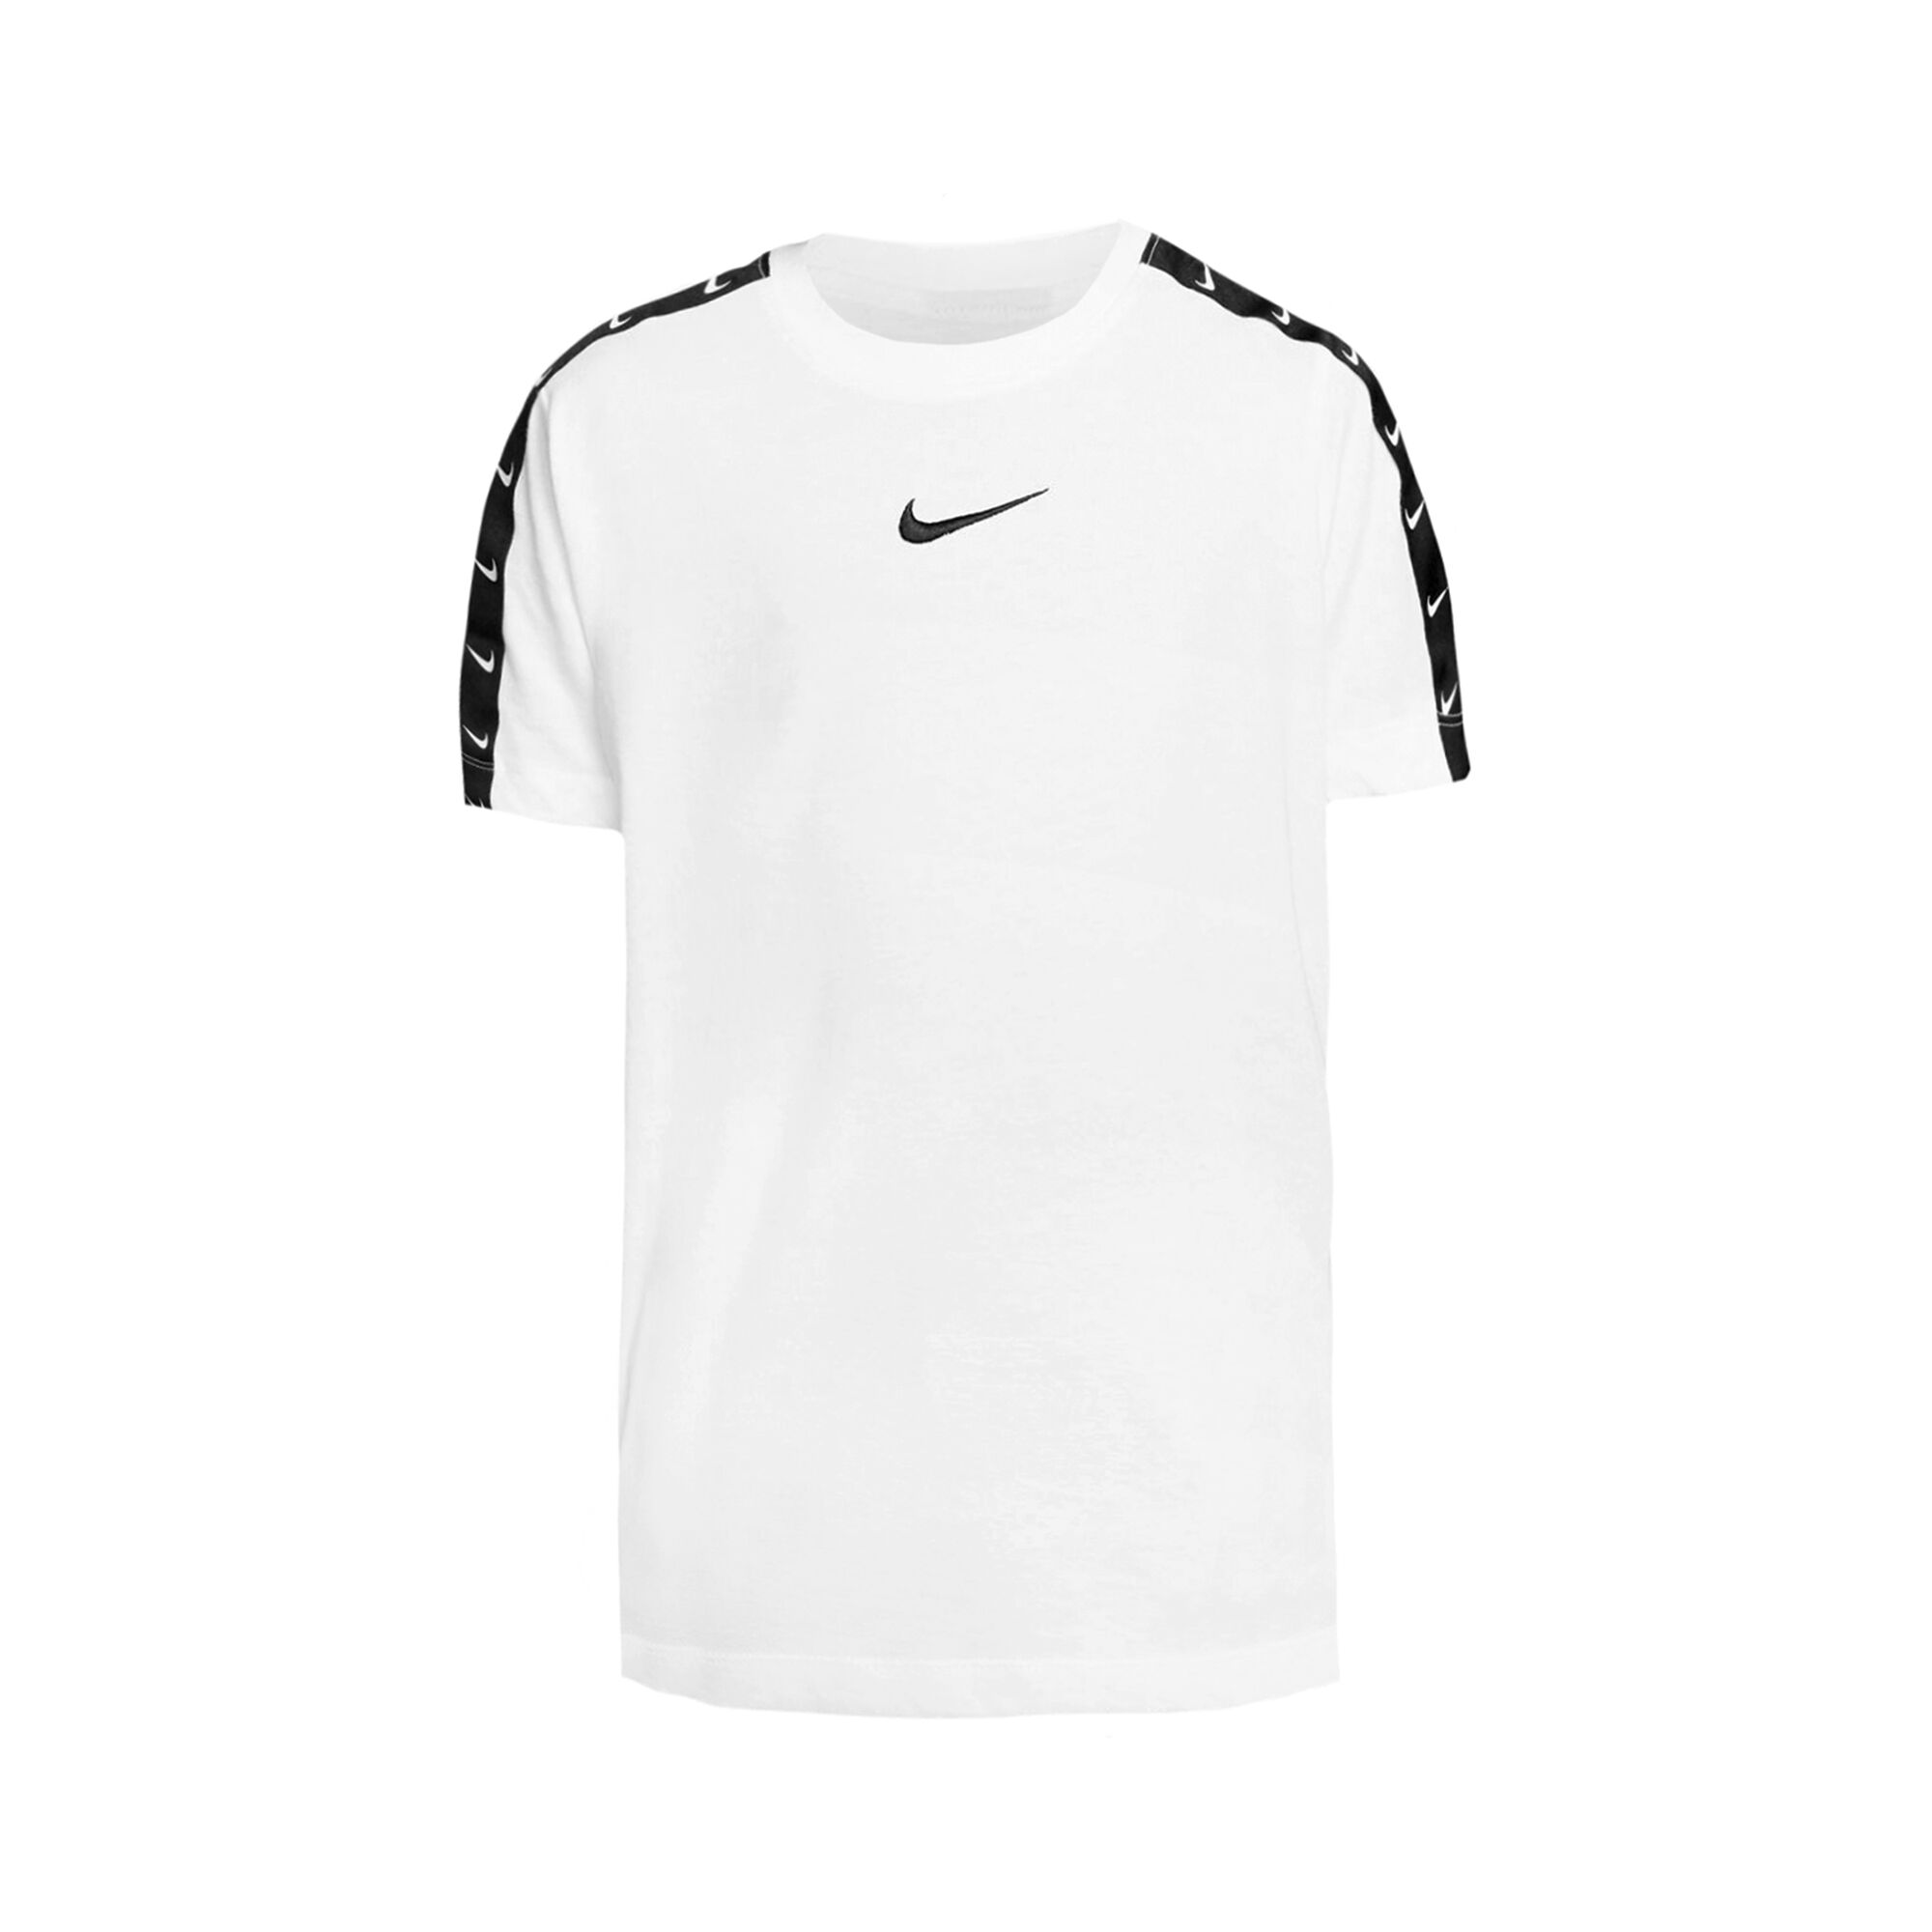 Buy Nike Sportswear Swoosh Tape T-Shirt Boys White, Black online ...